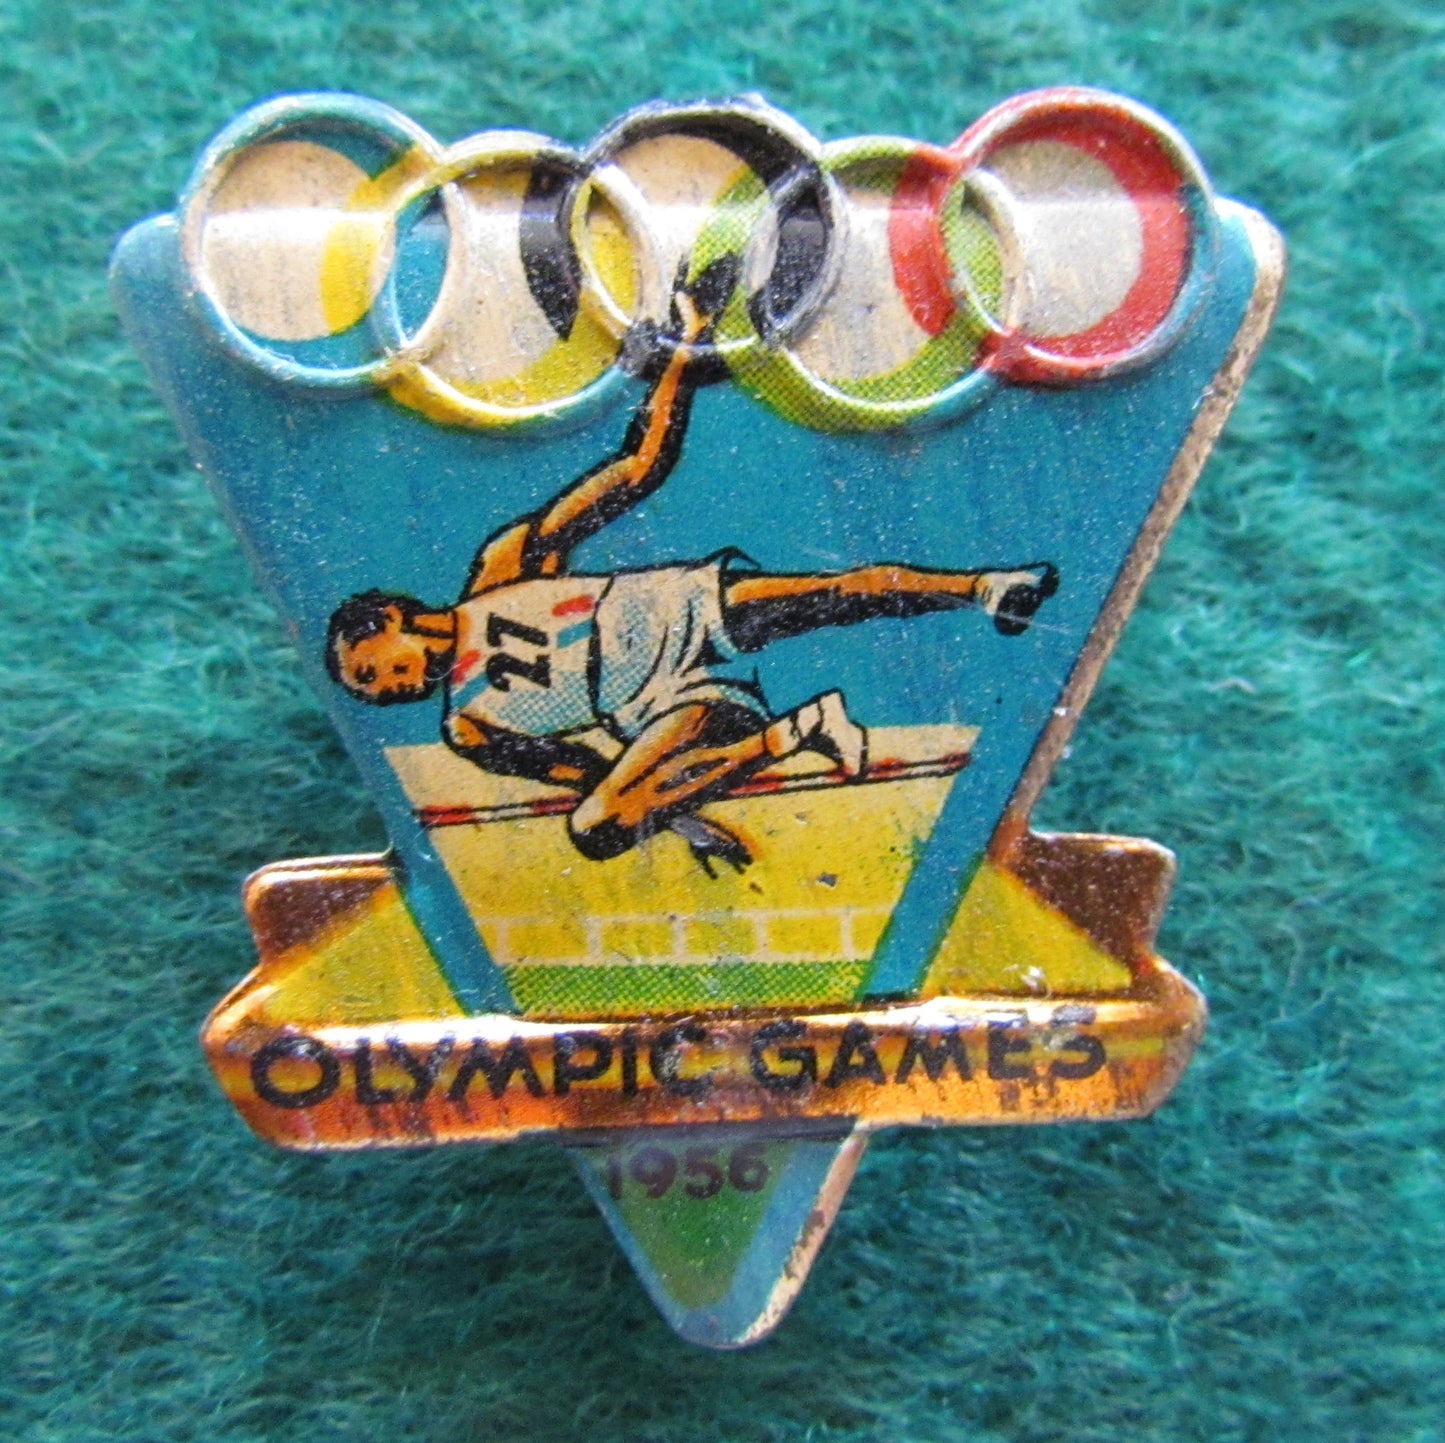 Australian Melbourne 1956 Olympic Games High Jump Tin Badge